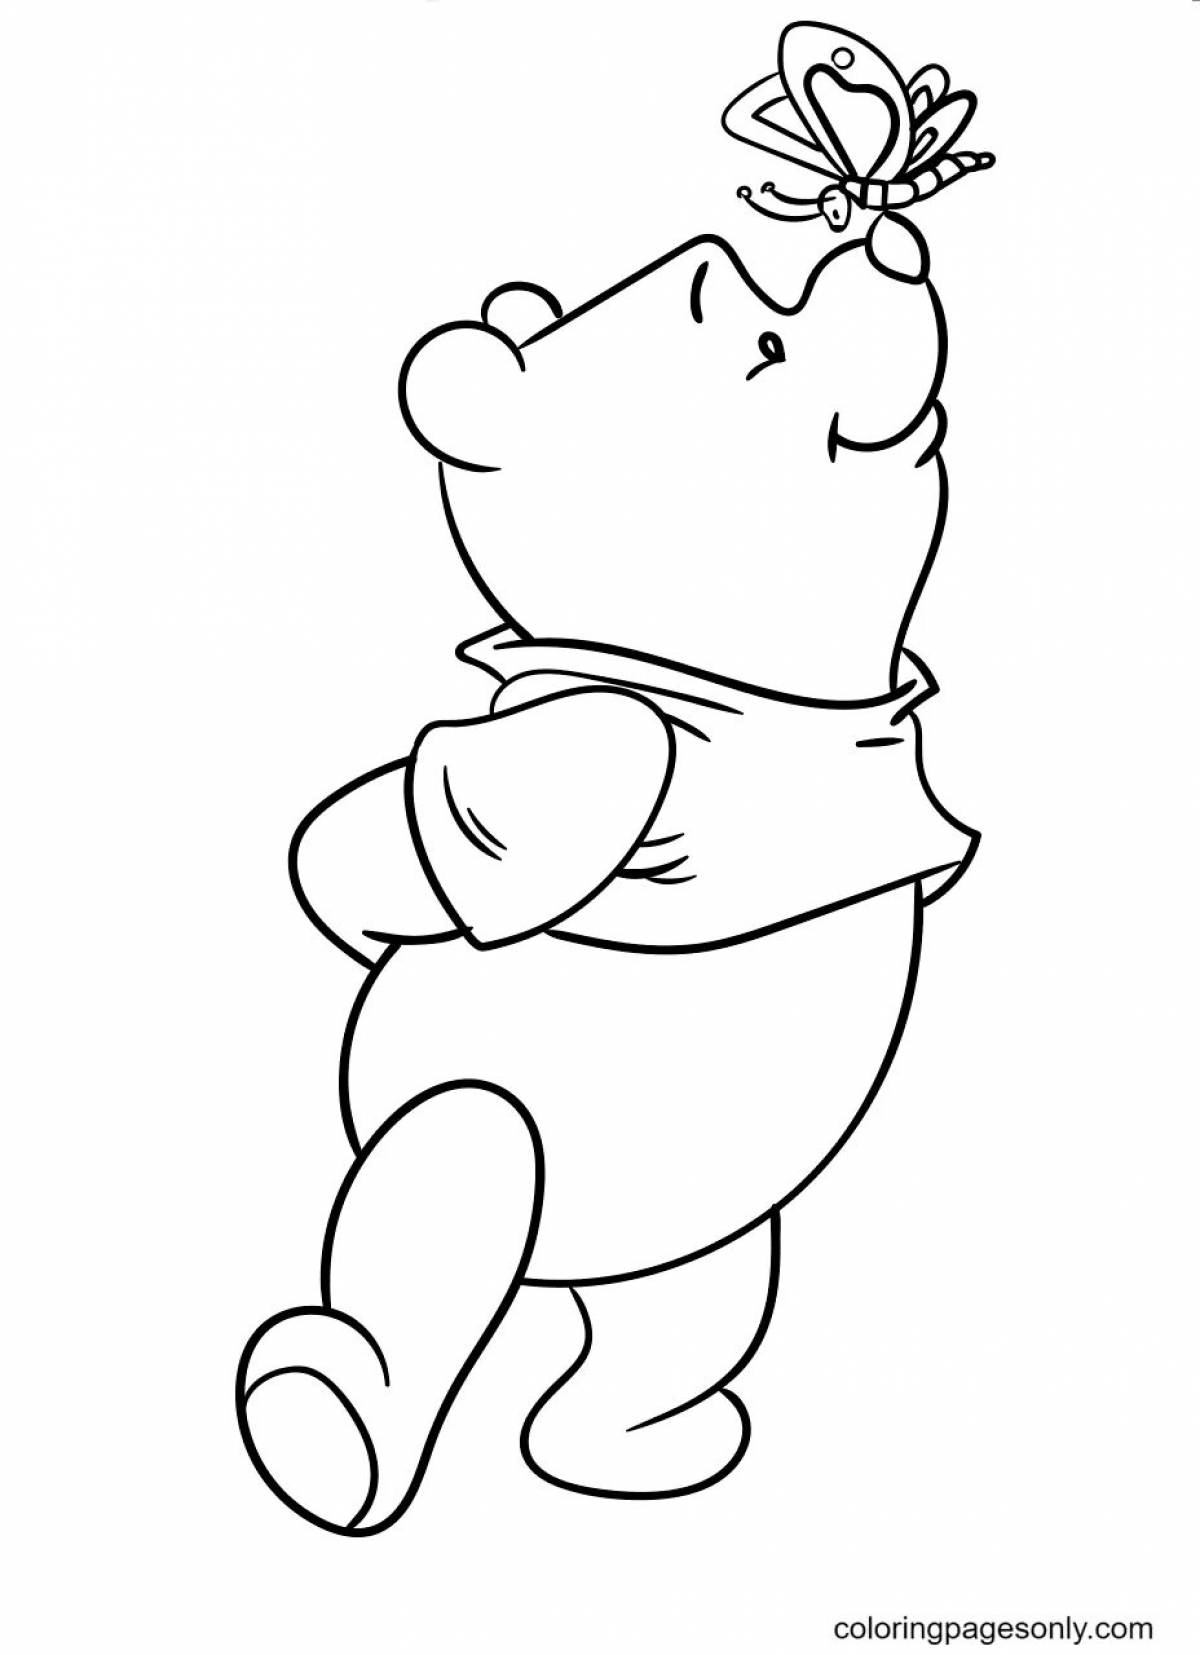 Winnie the pooh baby #6